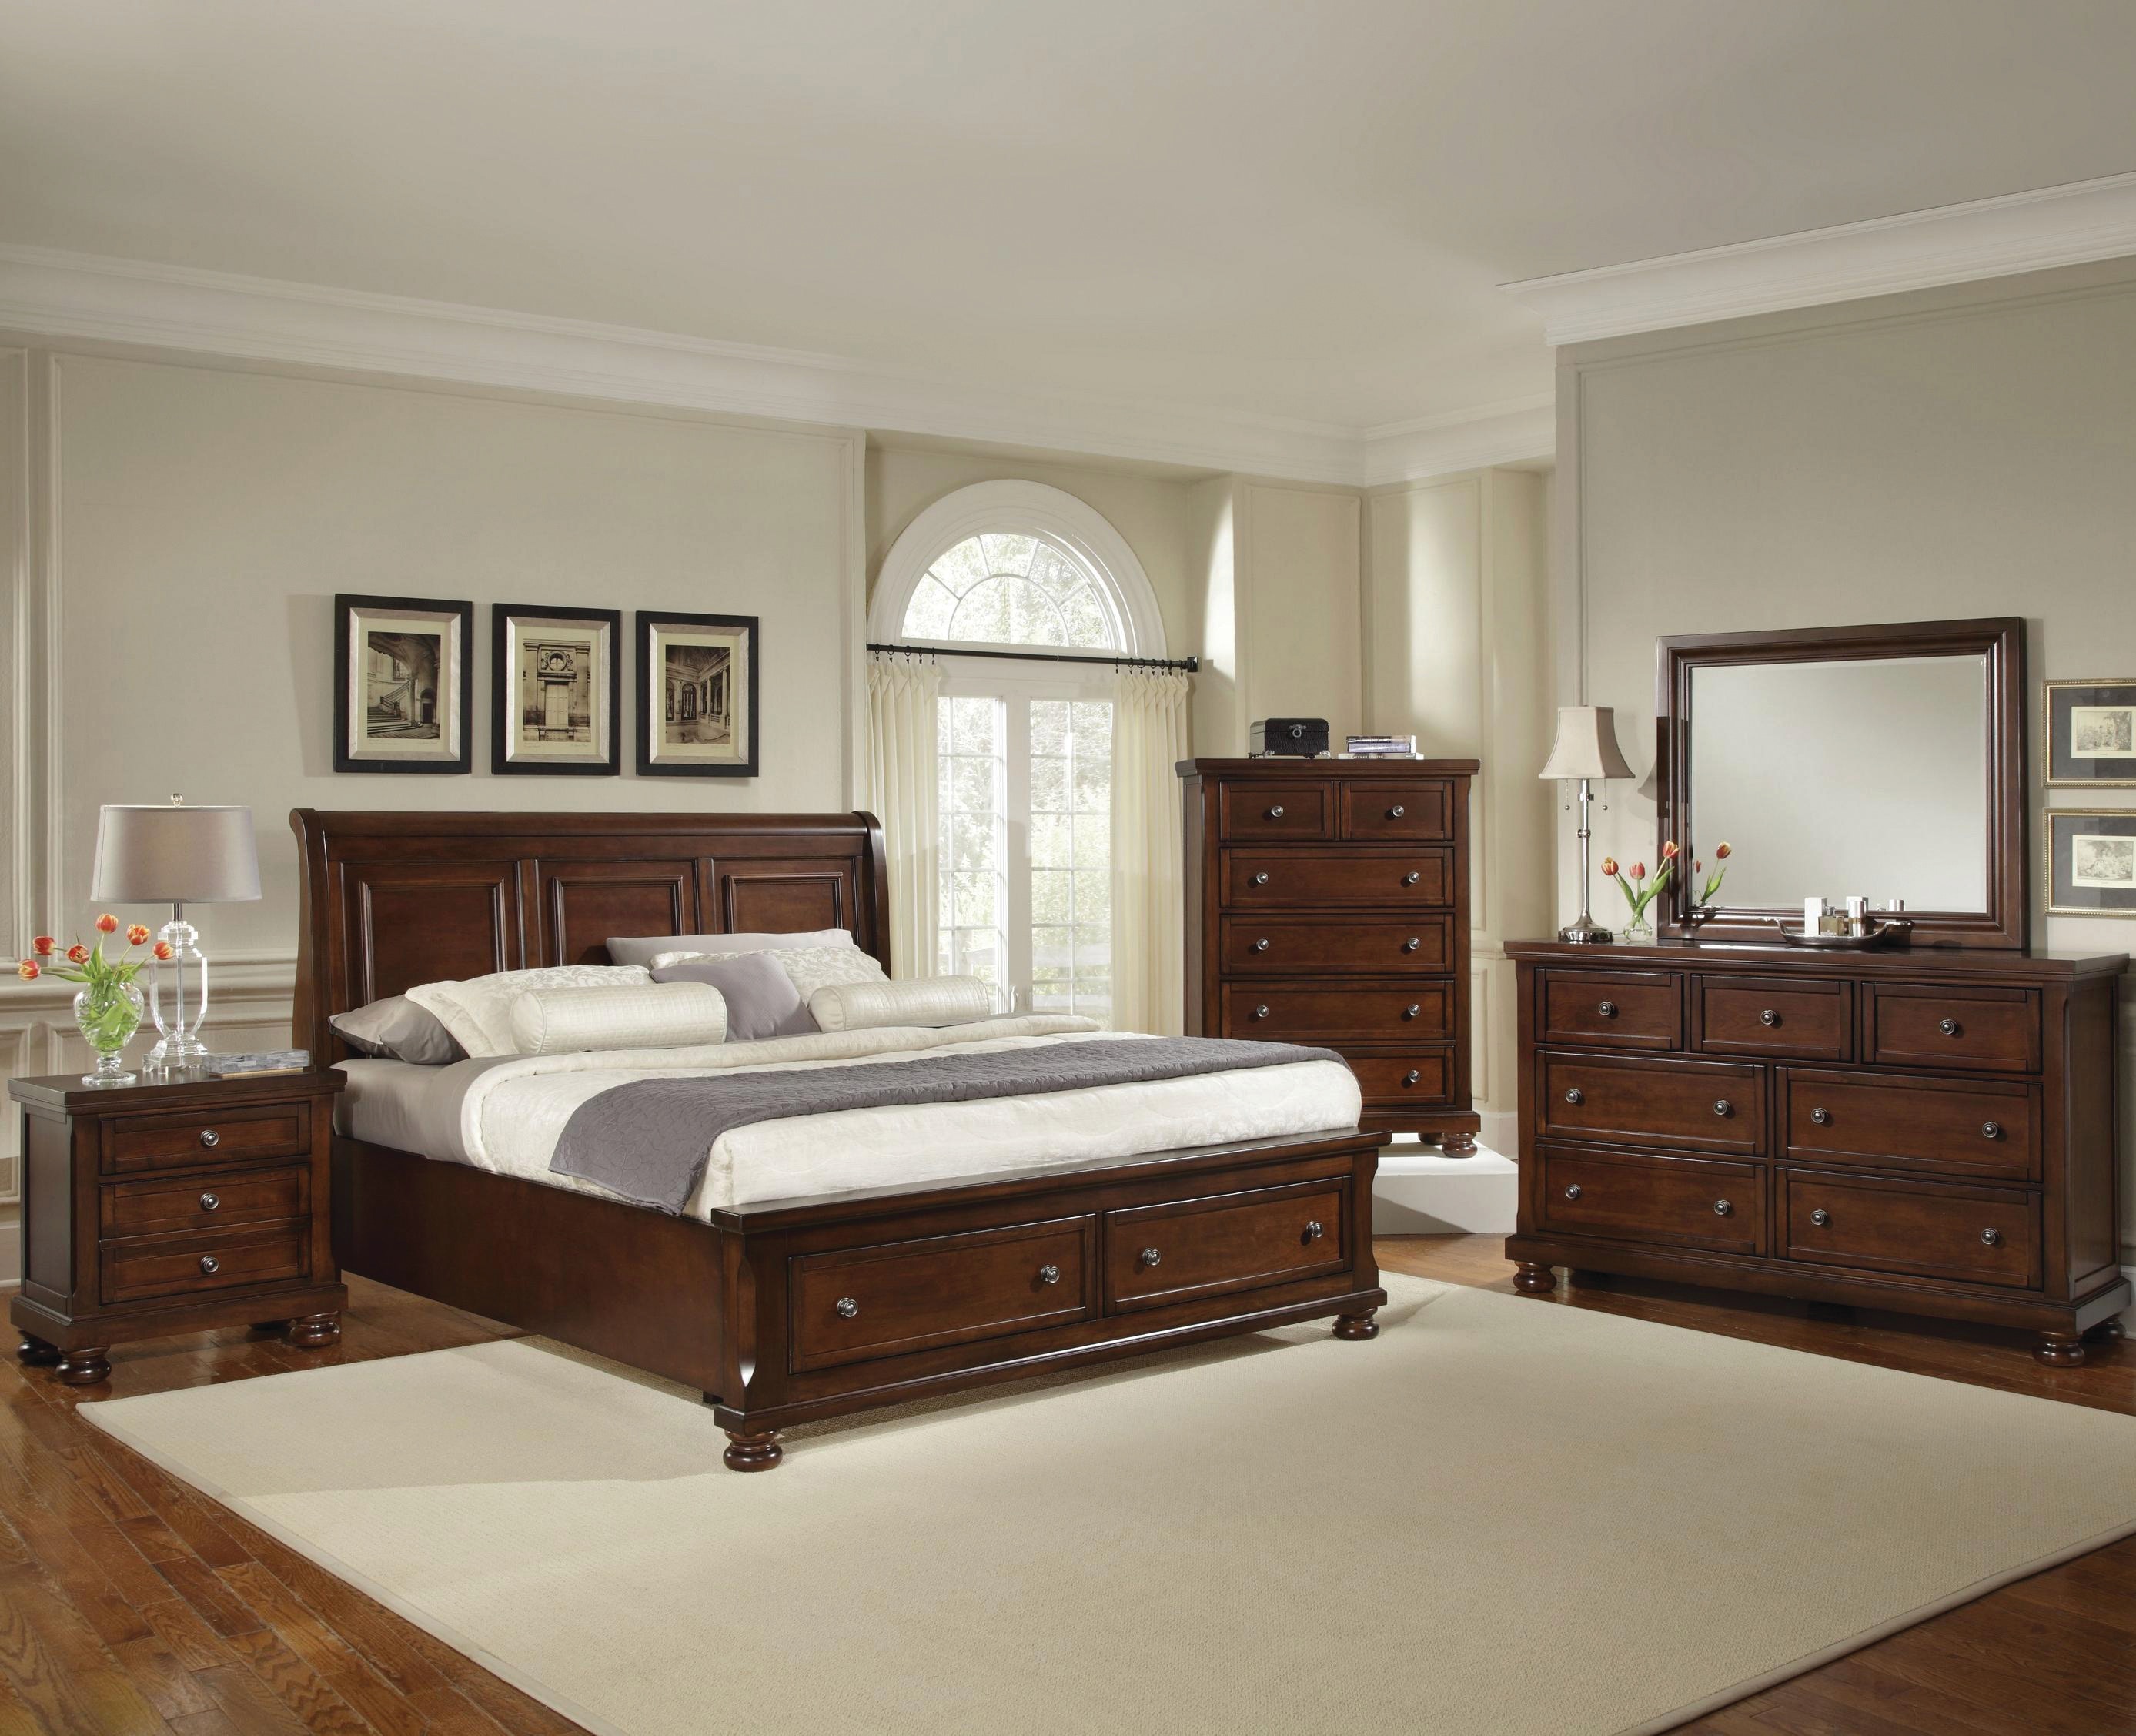 discontinued vaughan bassett bedroom furniture